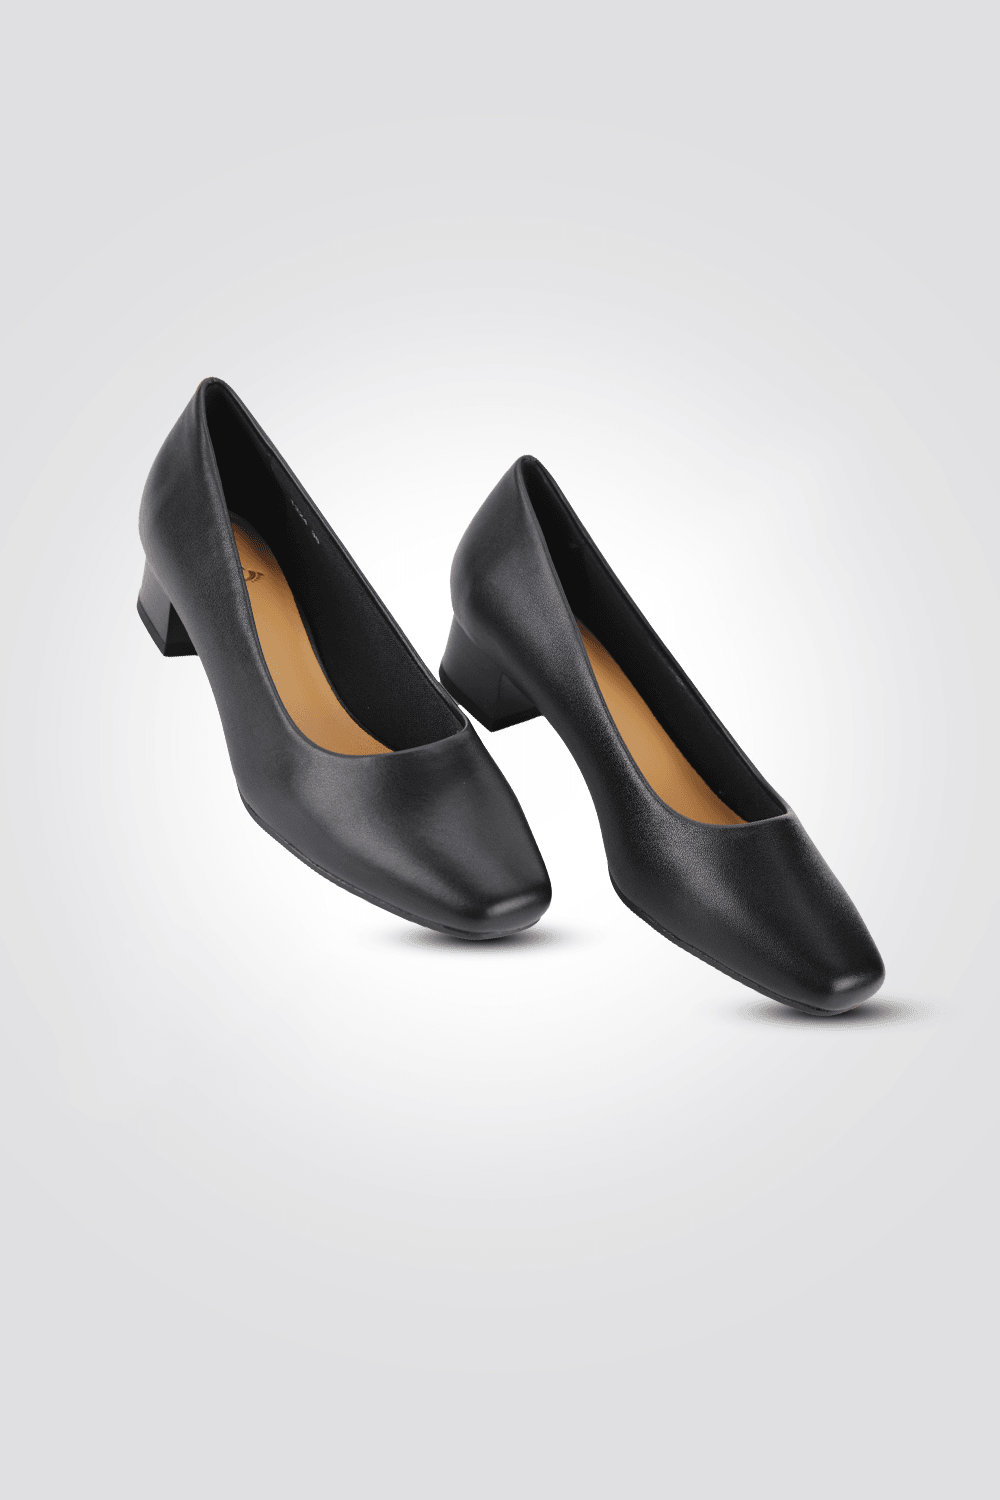 LADY COMFORT - נעל עקב חרטום מרובע בצבע שחור - MASHBIR//365